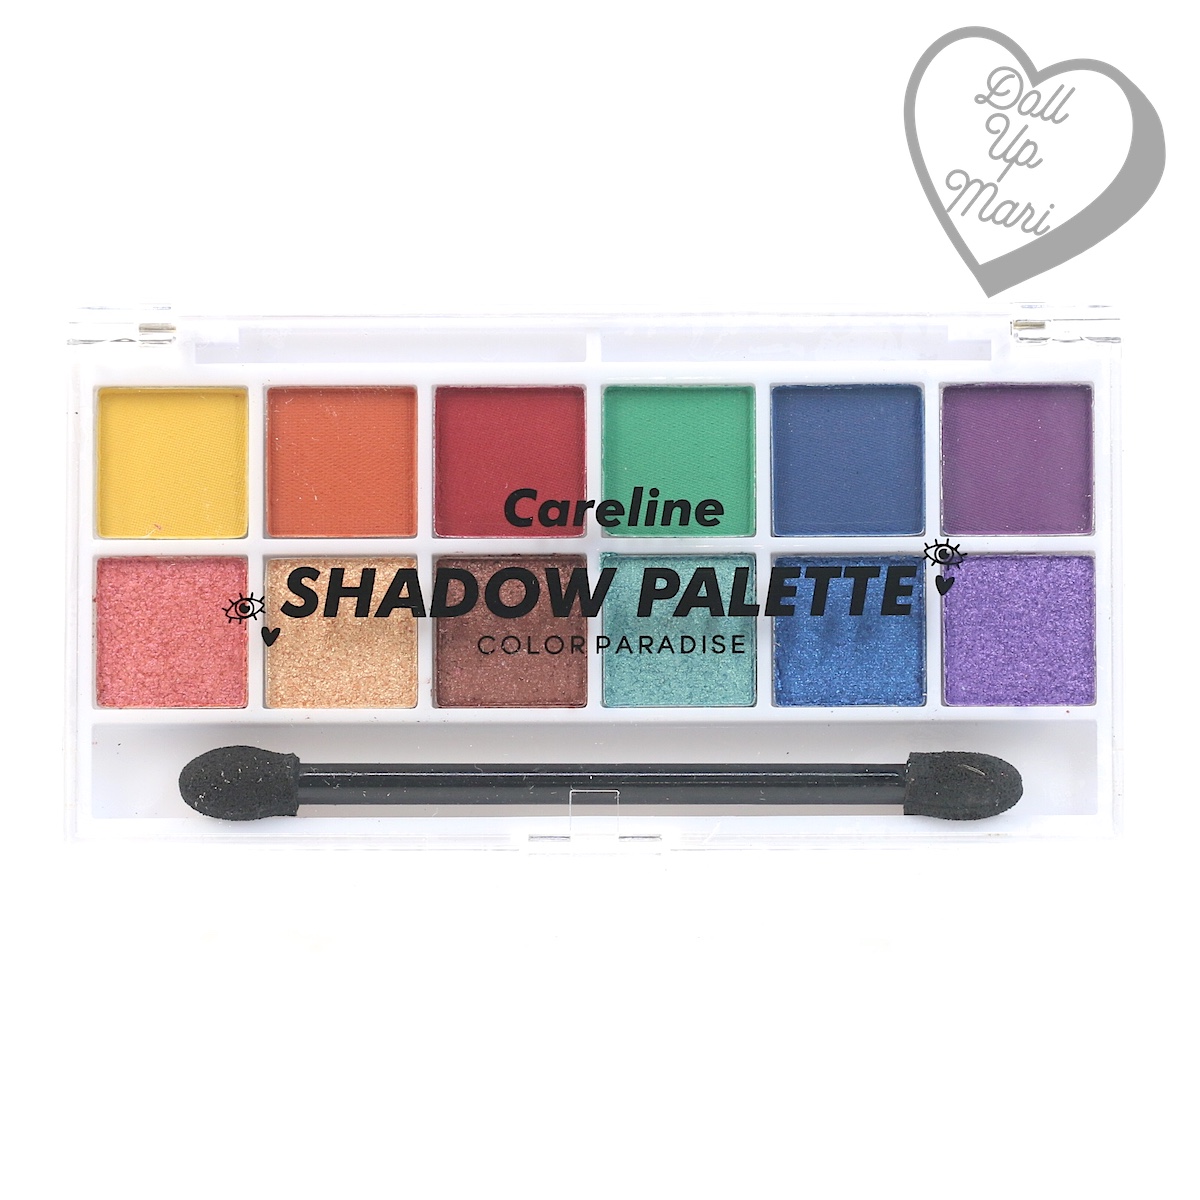 Careline Shadow Palette in Color Paradise